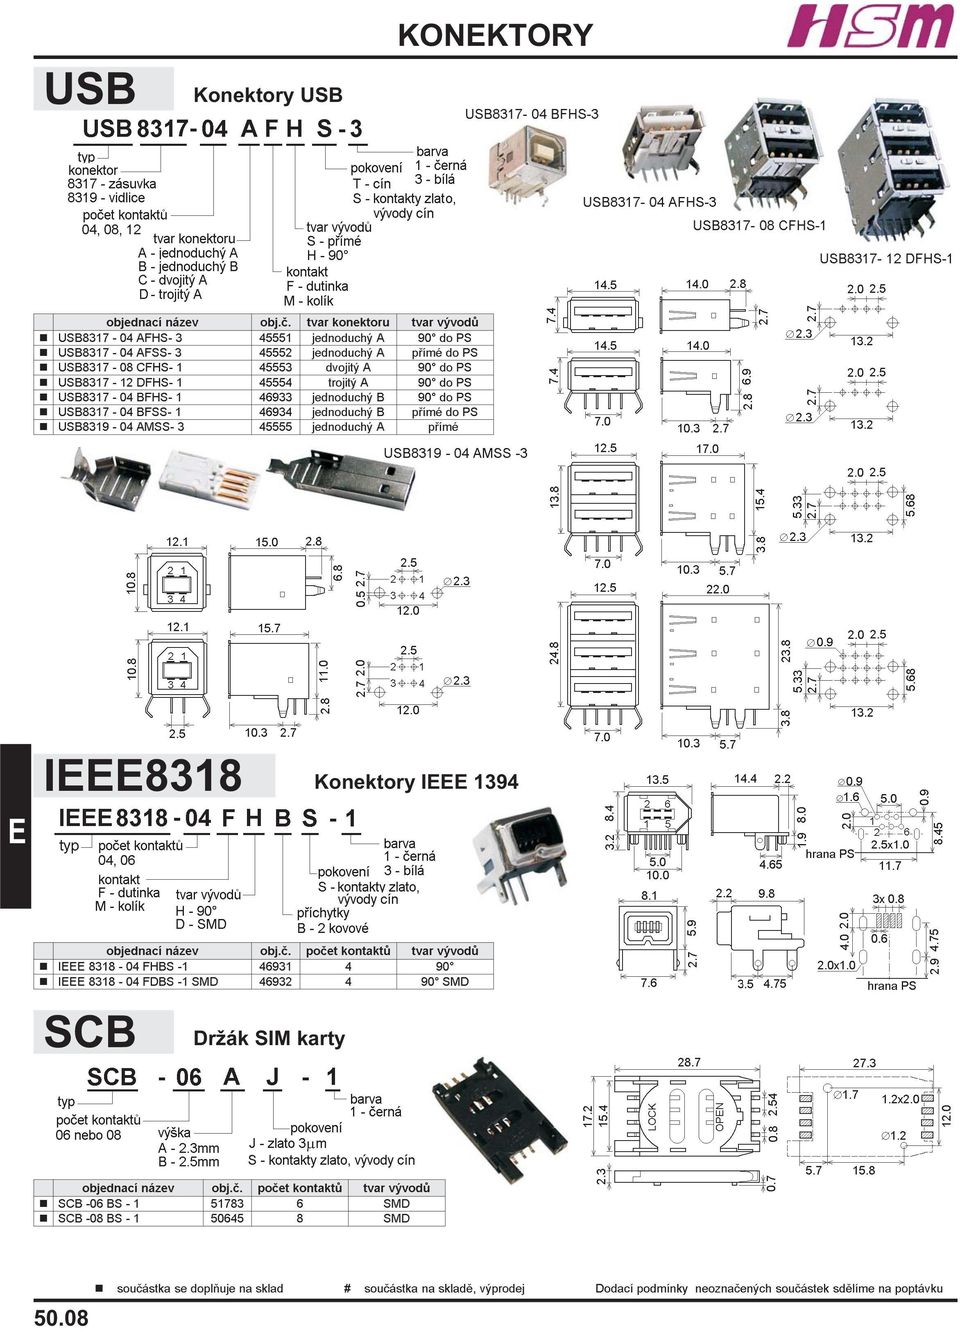 45554 trojitý A 90 do PS n USB8317-04 BFHS- 1 46933 jednoduchý B 90 do PS n USB8317-04 BFSS- 1 46934 jednoduchý B pøímé do PS n USB8319-04 AMSS- 3 45555 jednoduchý A pøímé USB8319-04 AMSS -3